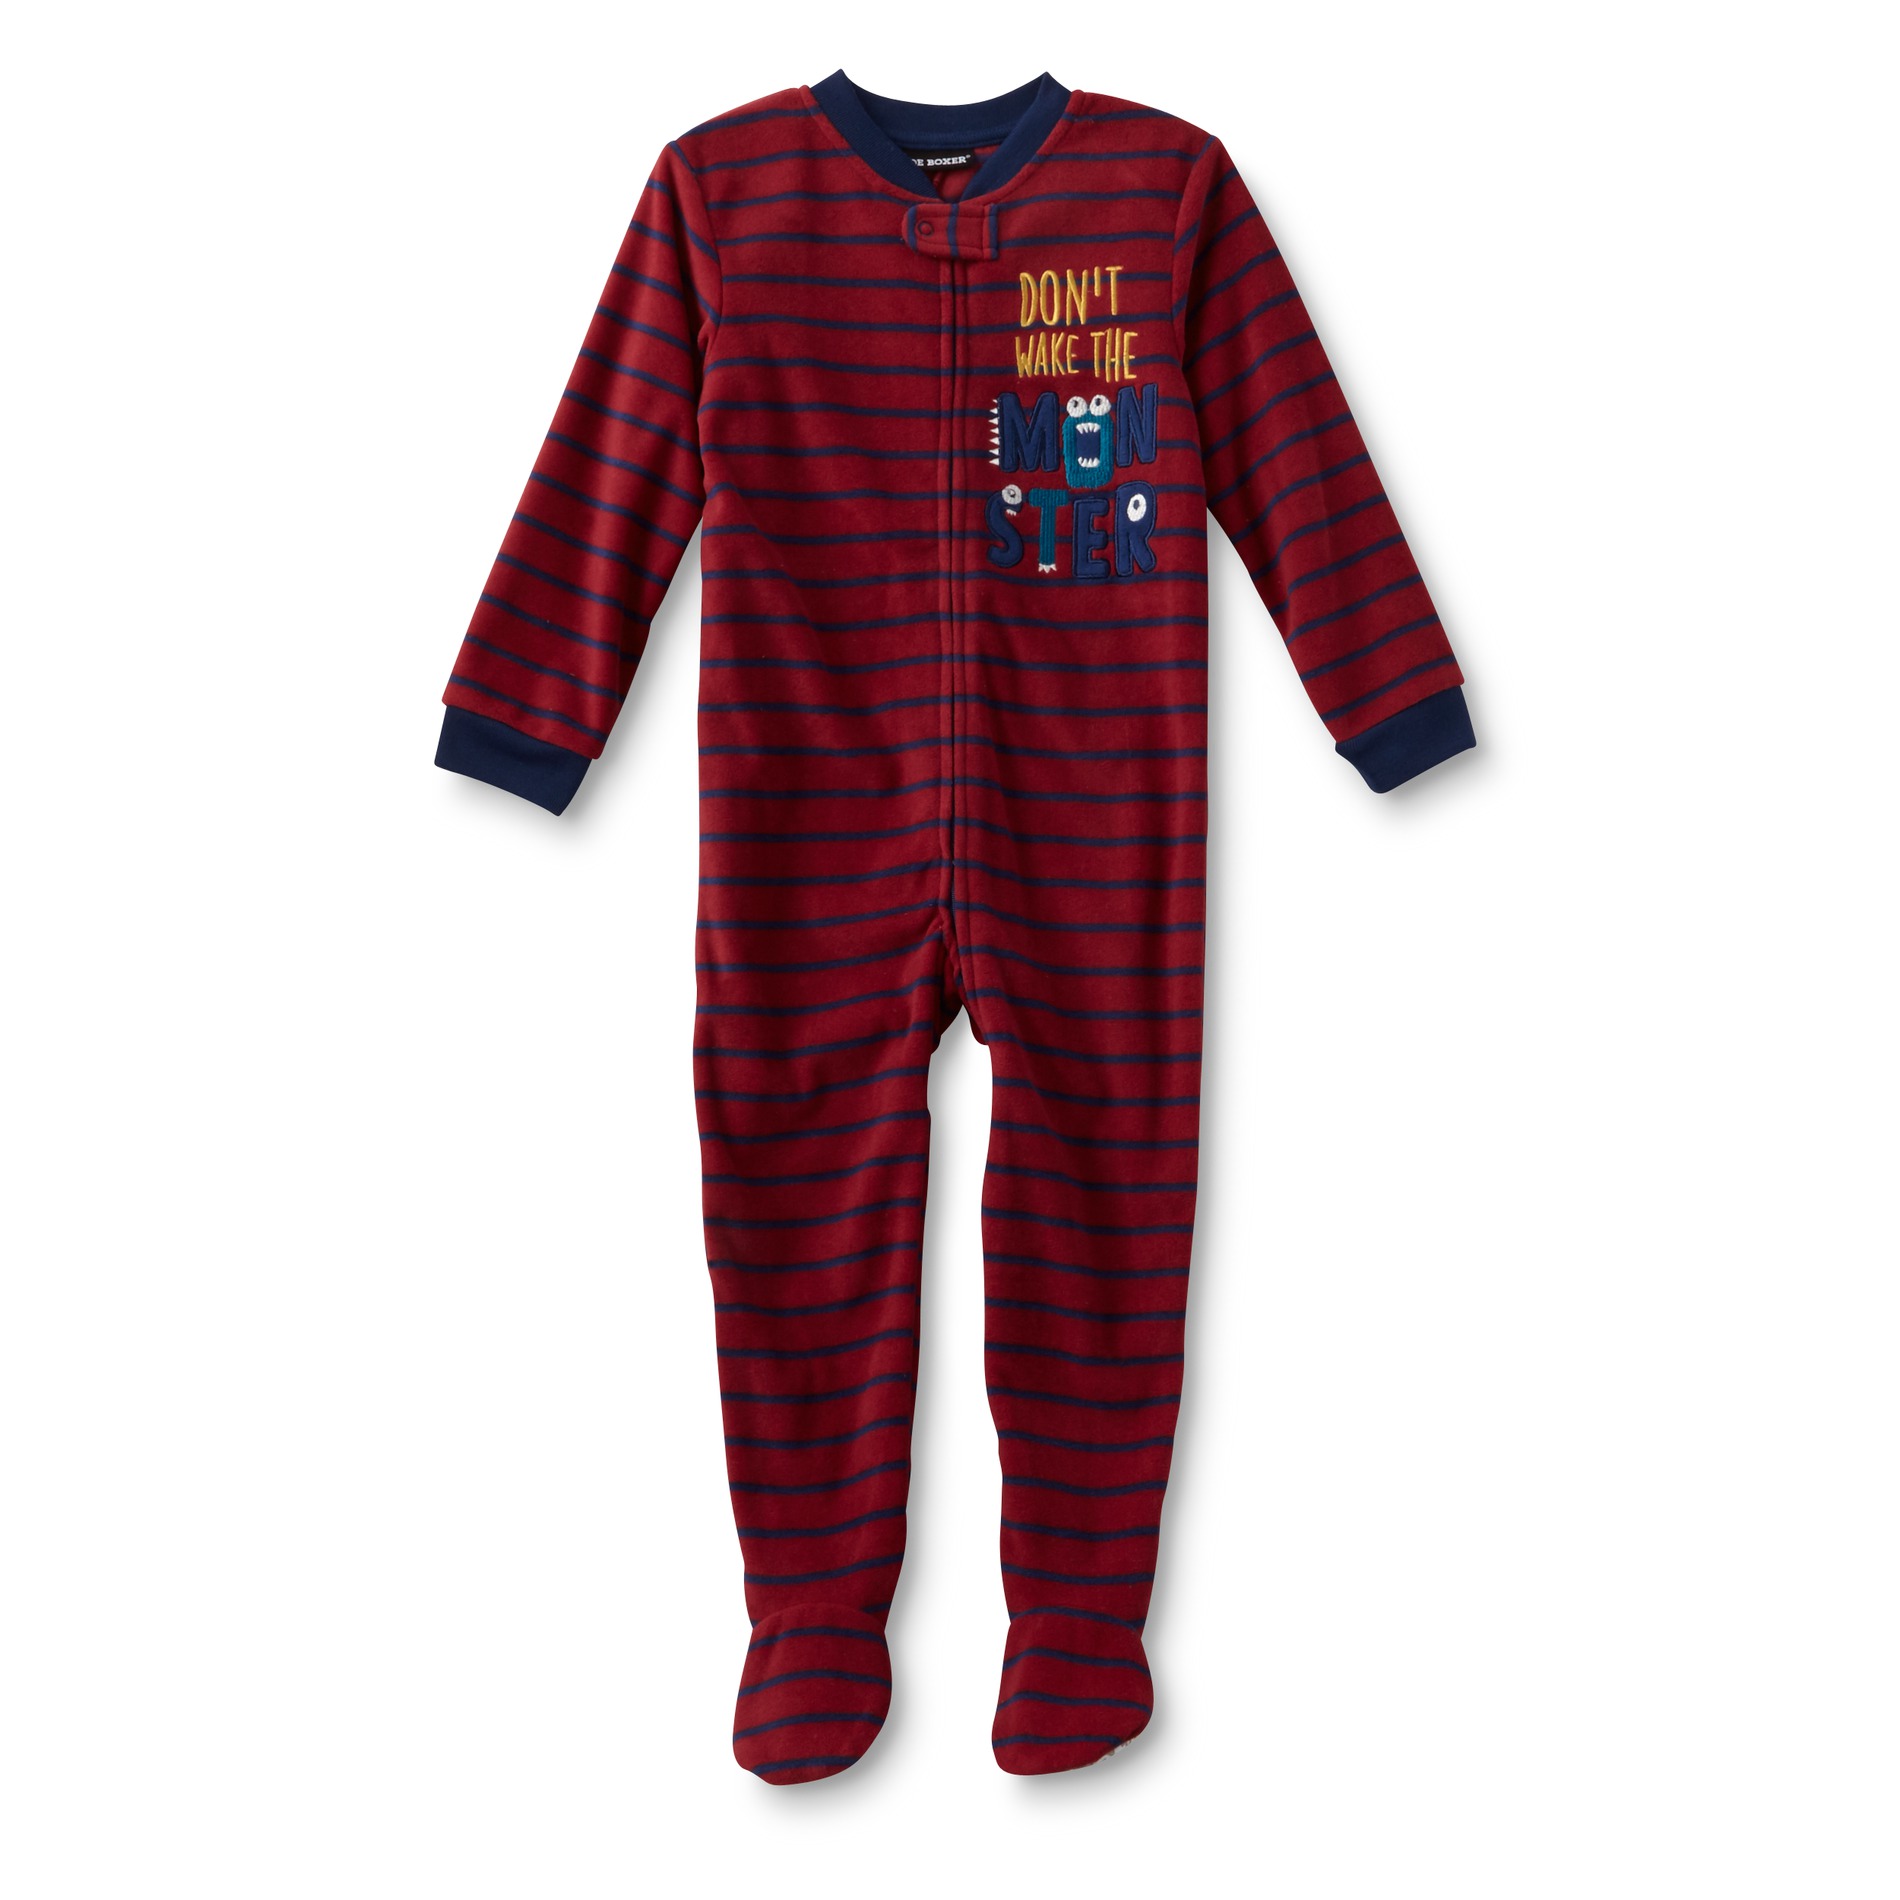 Joe Boxer Infant & Toddler Boy's Sleeper Pajamas - Striped